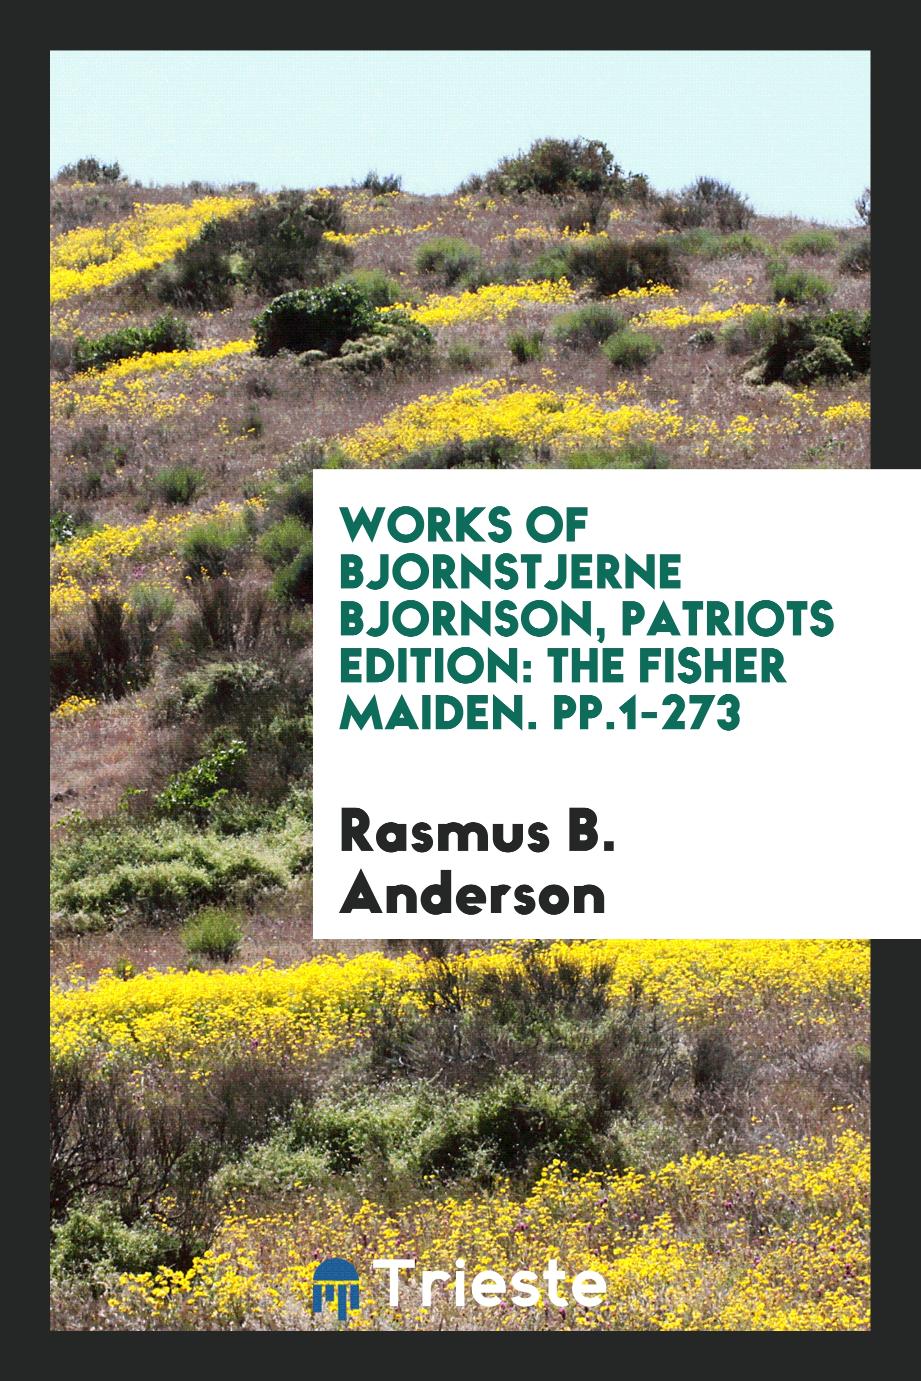 Works of Bjornstjerne Bjornson, Patriots Edition: The Fisher Maiden. pp.1-273